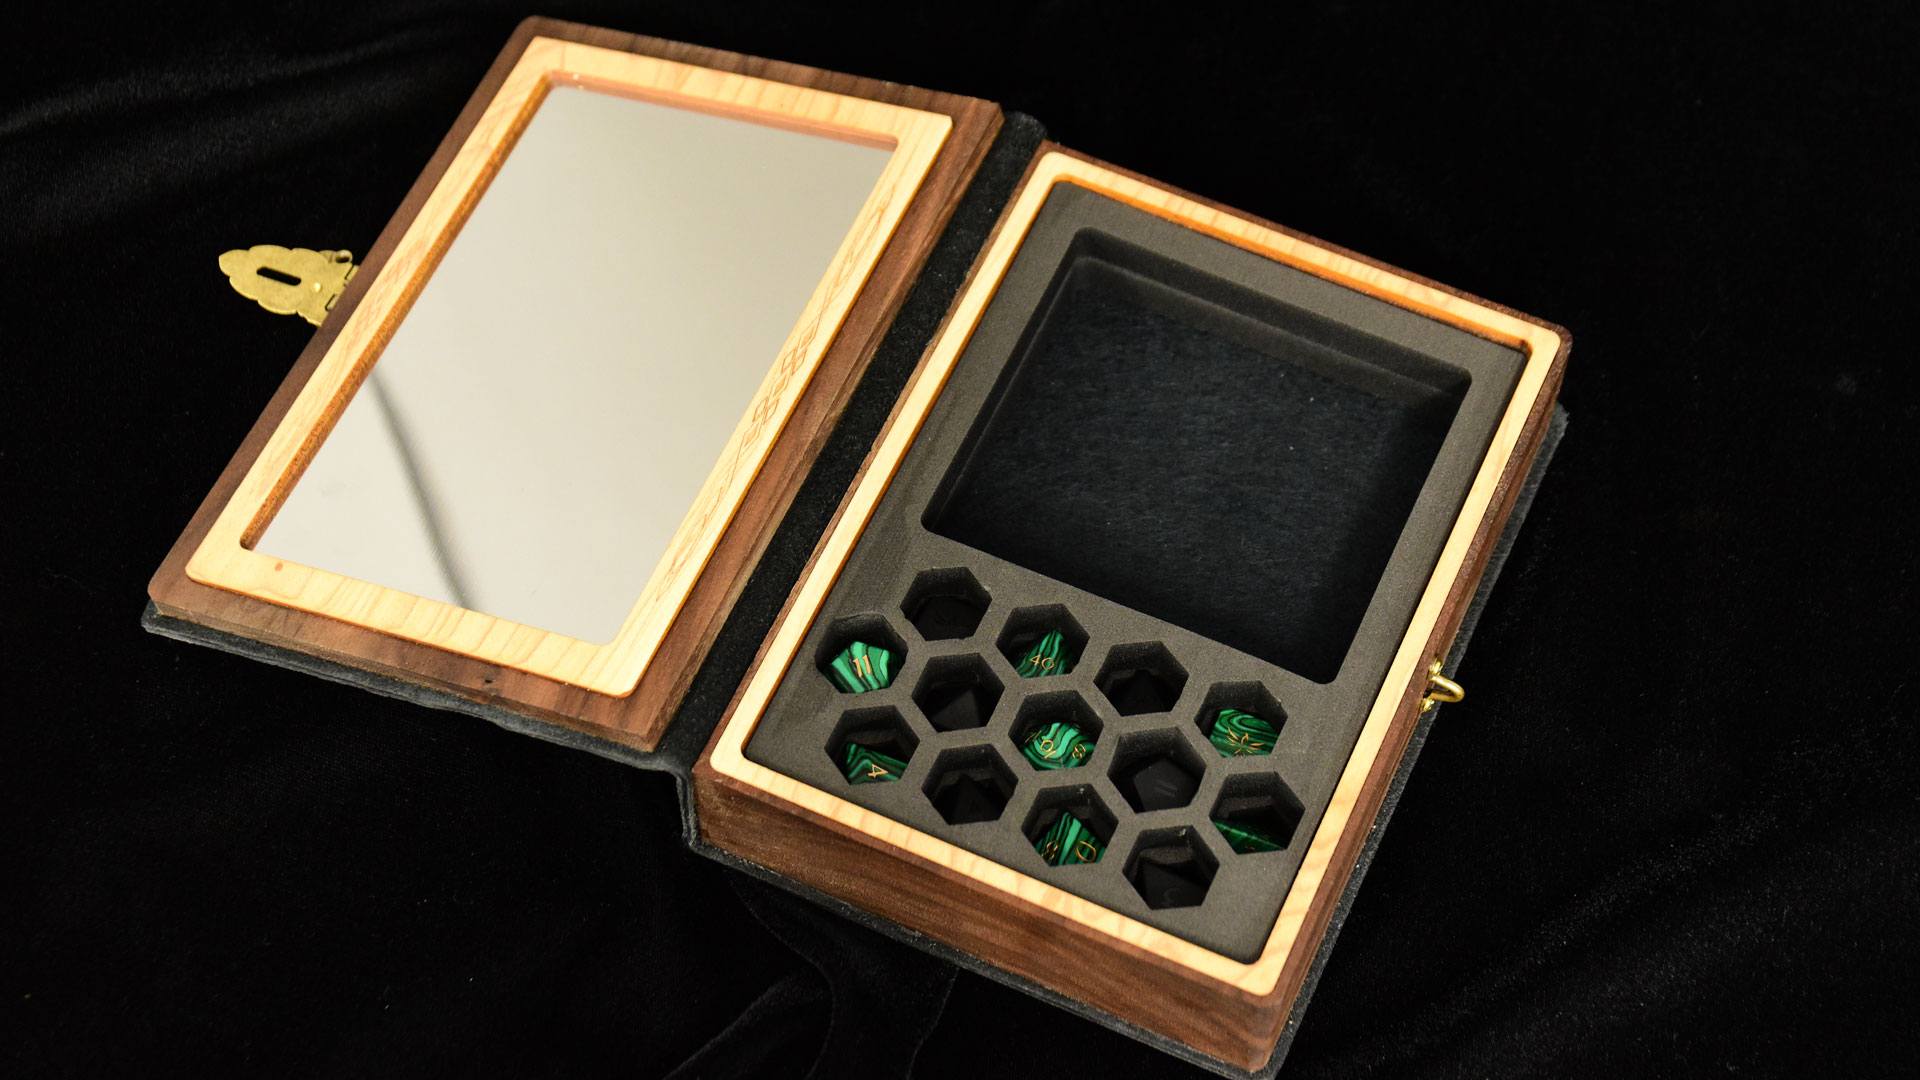 Interior of Cthulhu Spellbook gaming box with foam insert holding gemstone dice